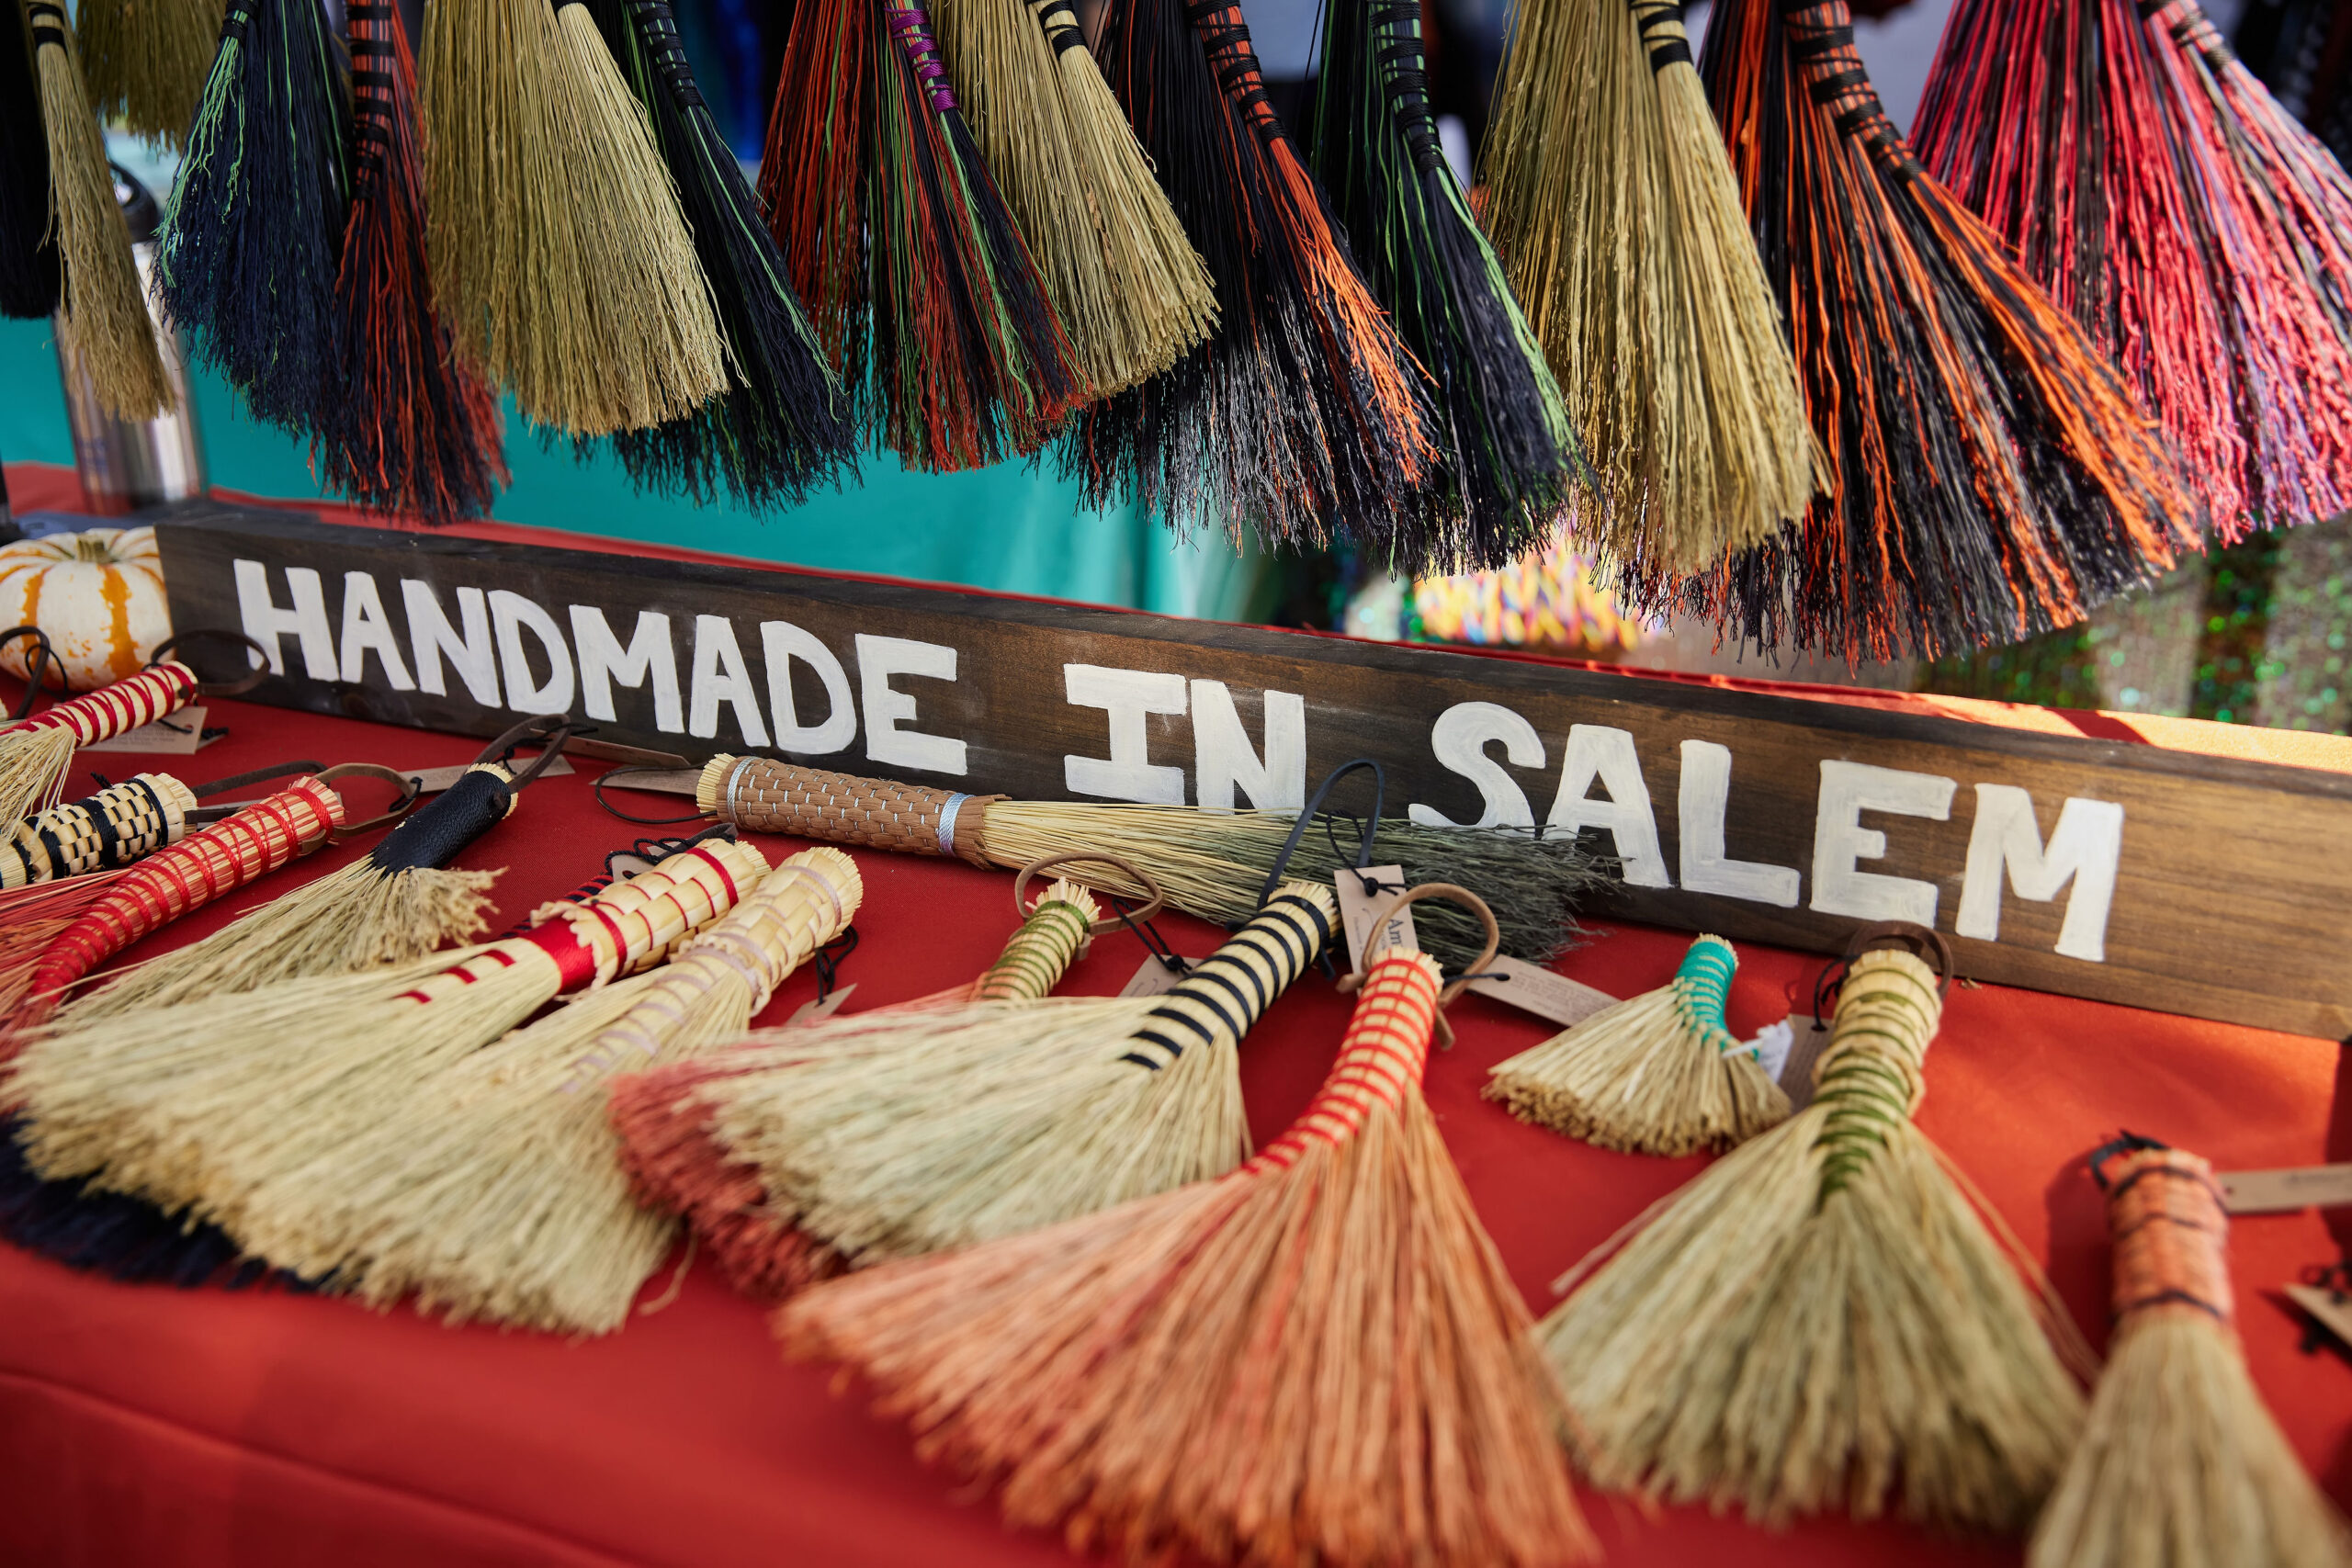 Handmade in salem brooms.